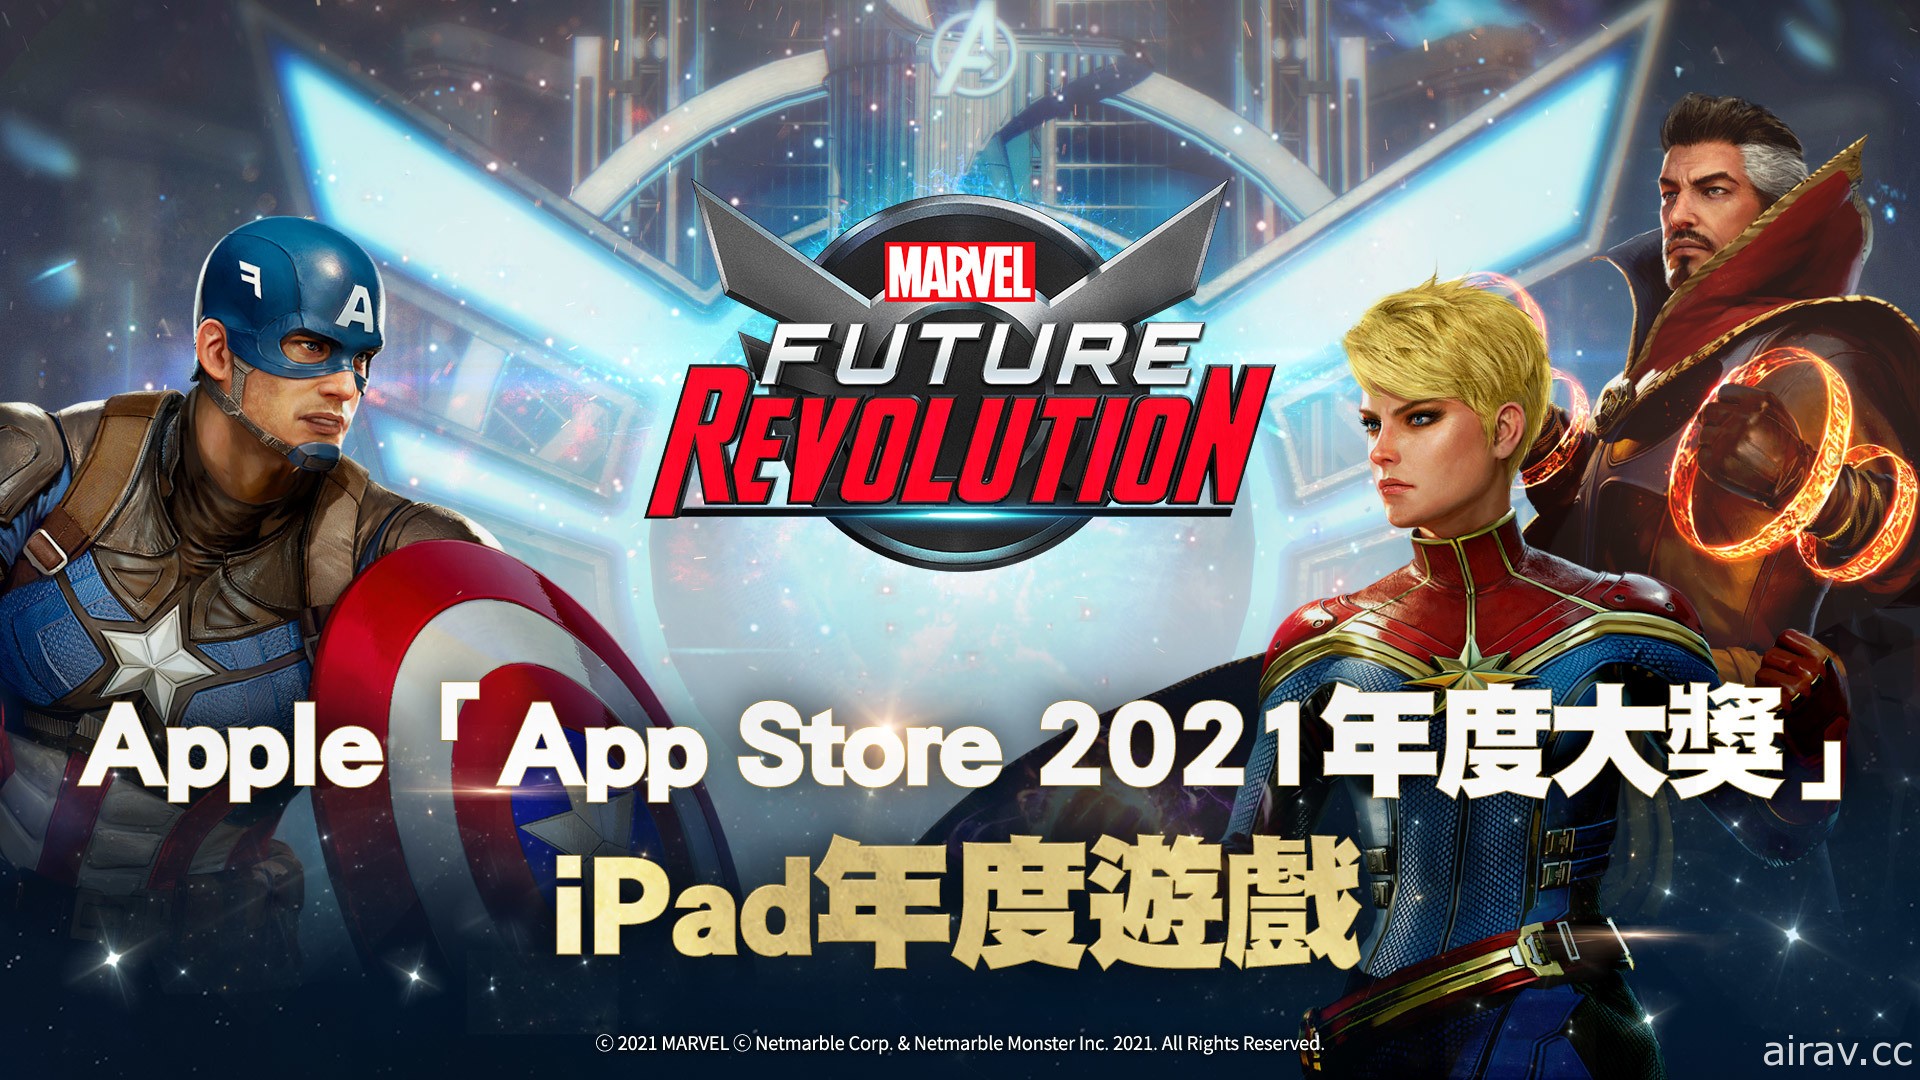 《MARVEL 未來革命》榮獲 Apple「App Store 2021 年度大獎」